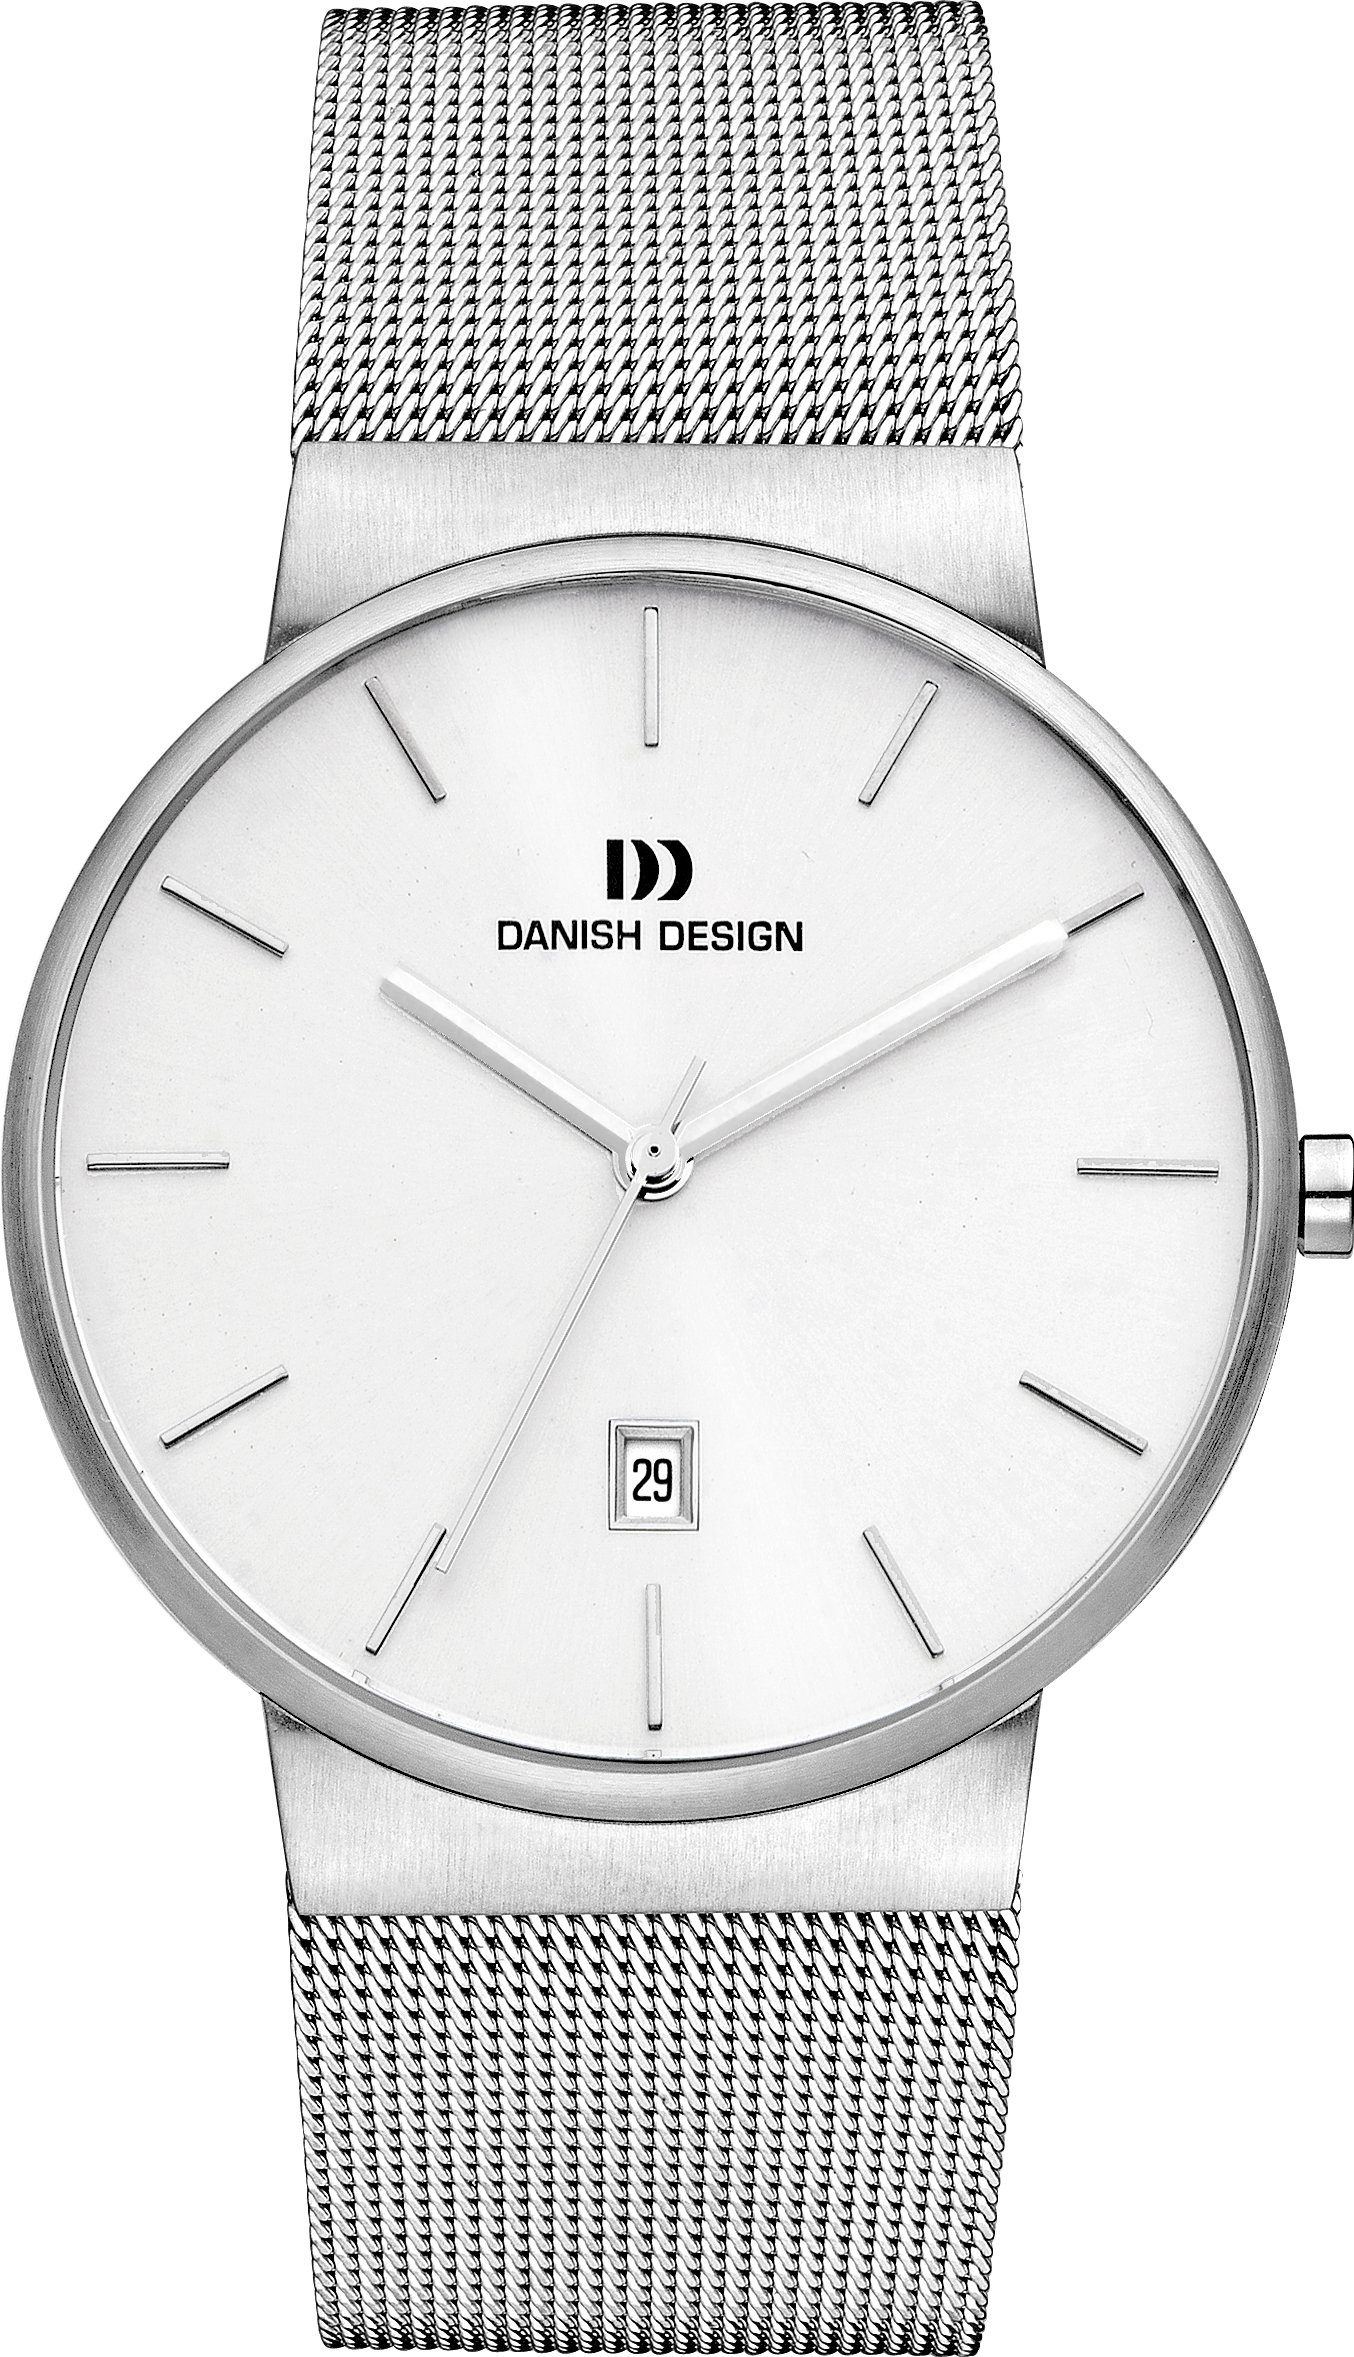 bei Silber mit Uhr Herren 6 Quarzuhr Danish Designuhr Datum Datum 40mm, TAGE Design